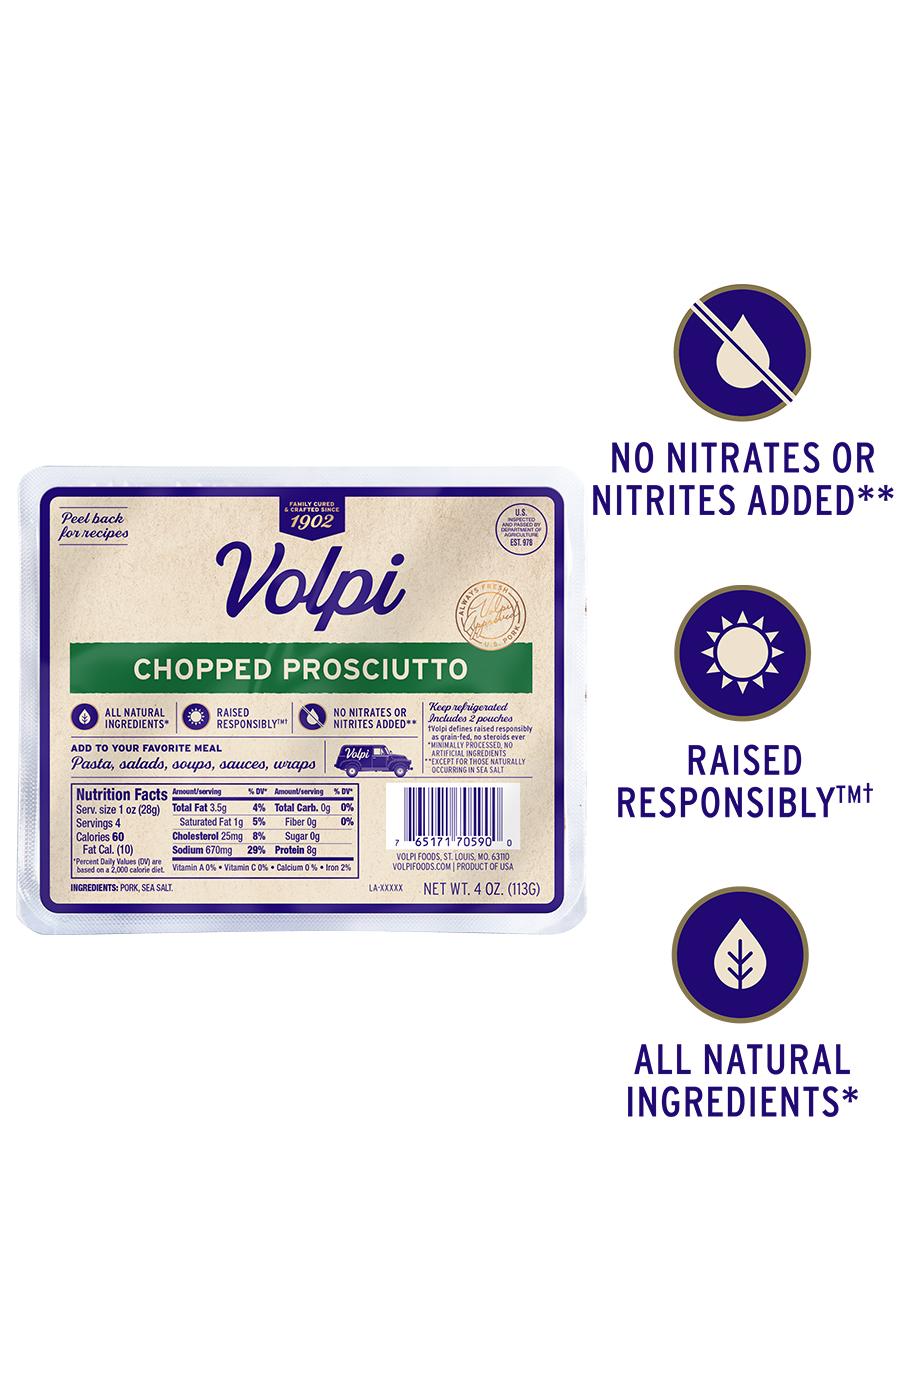 Volpi Chopped Prosciutto; image 3 of 3